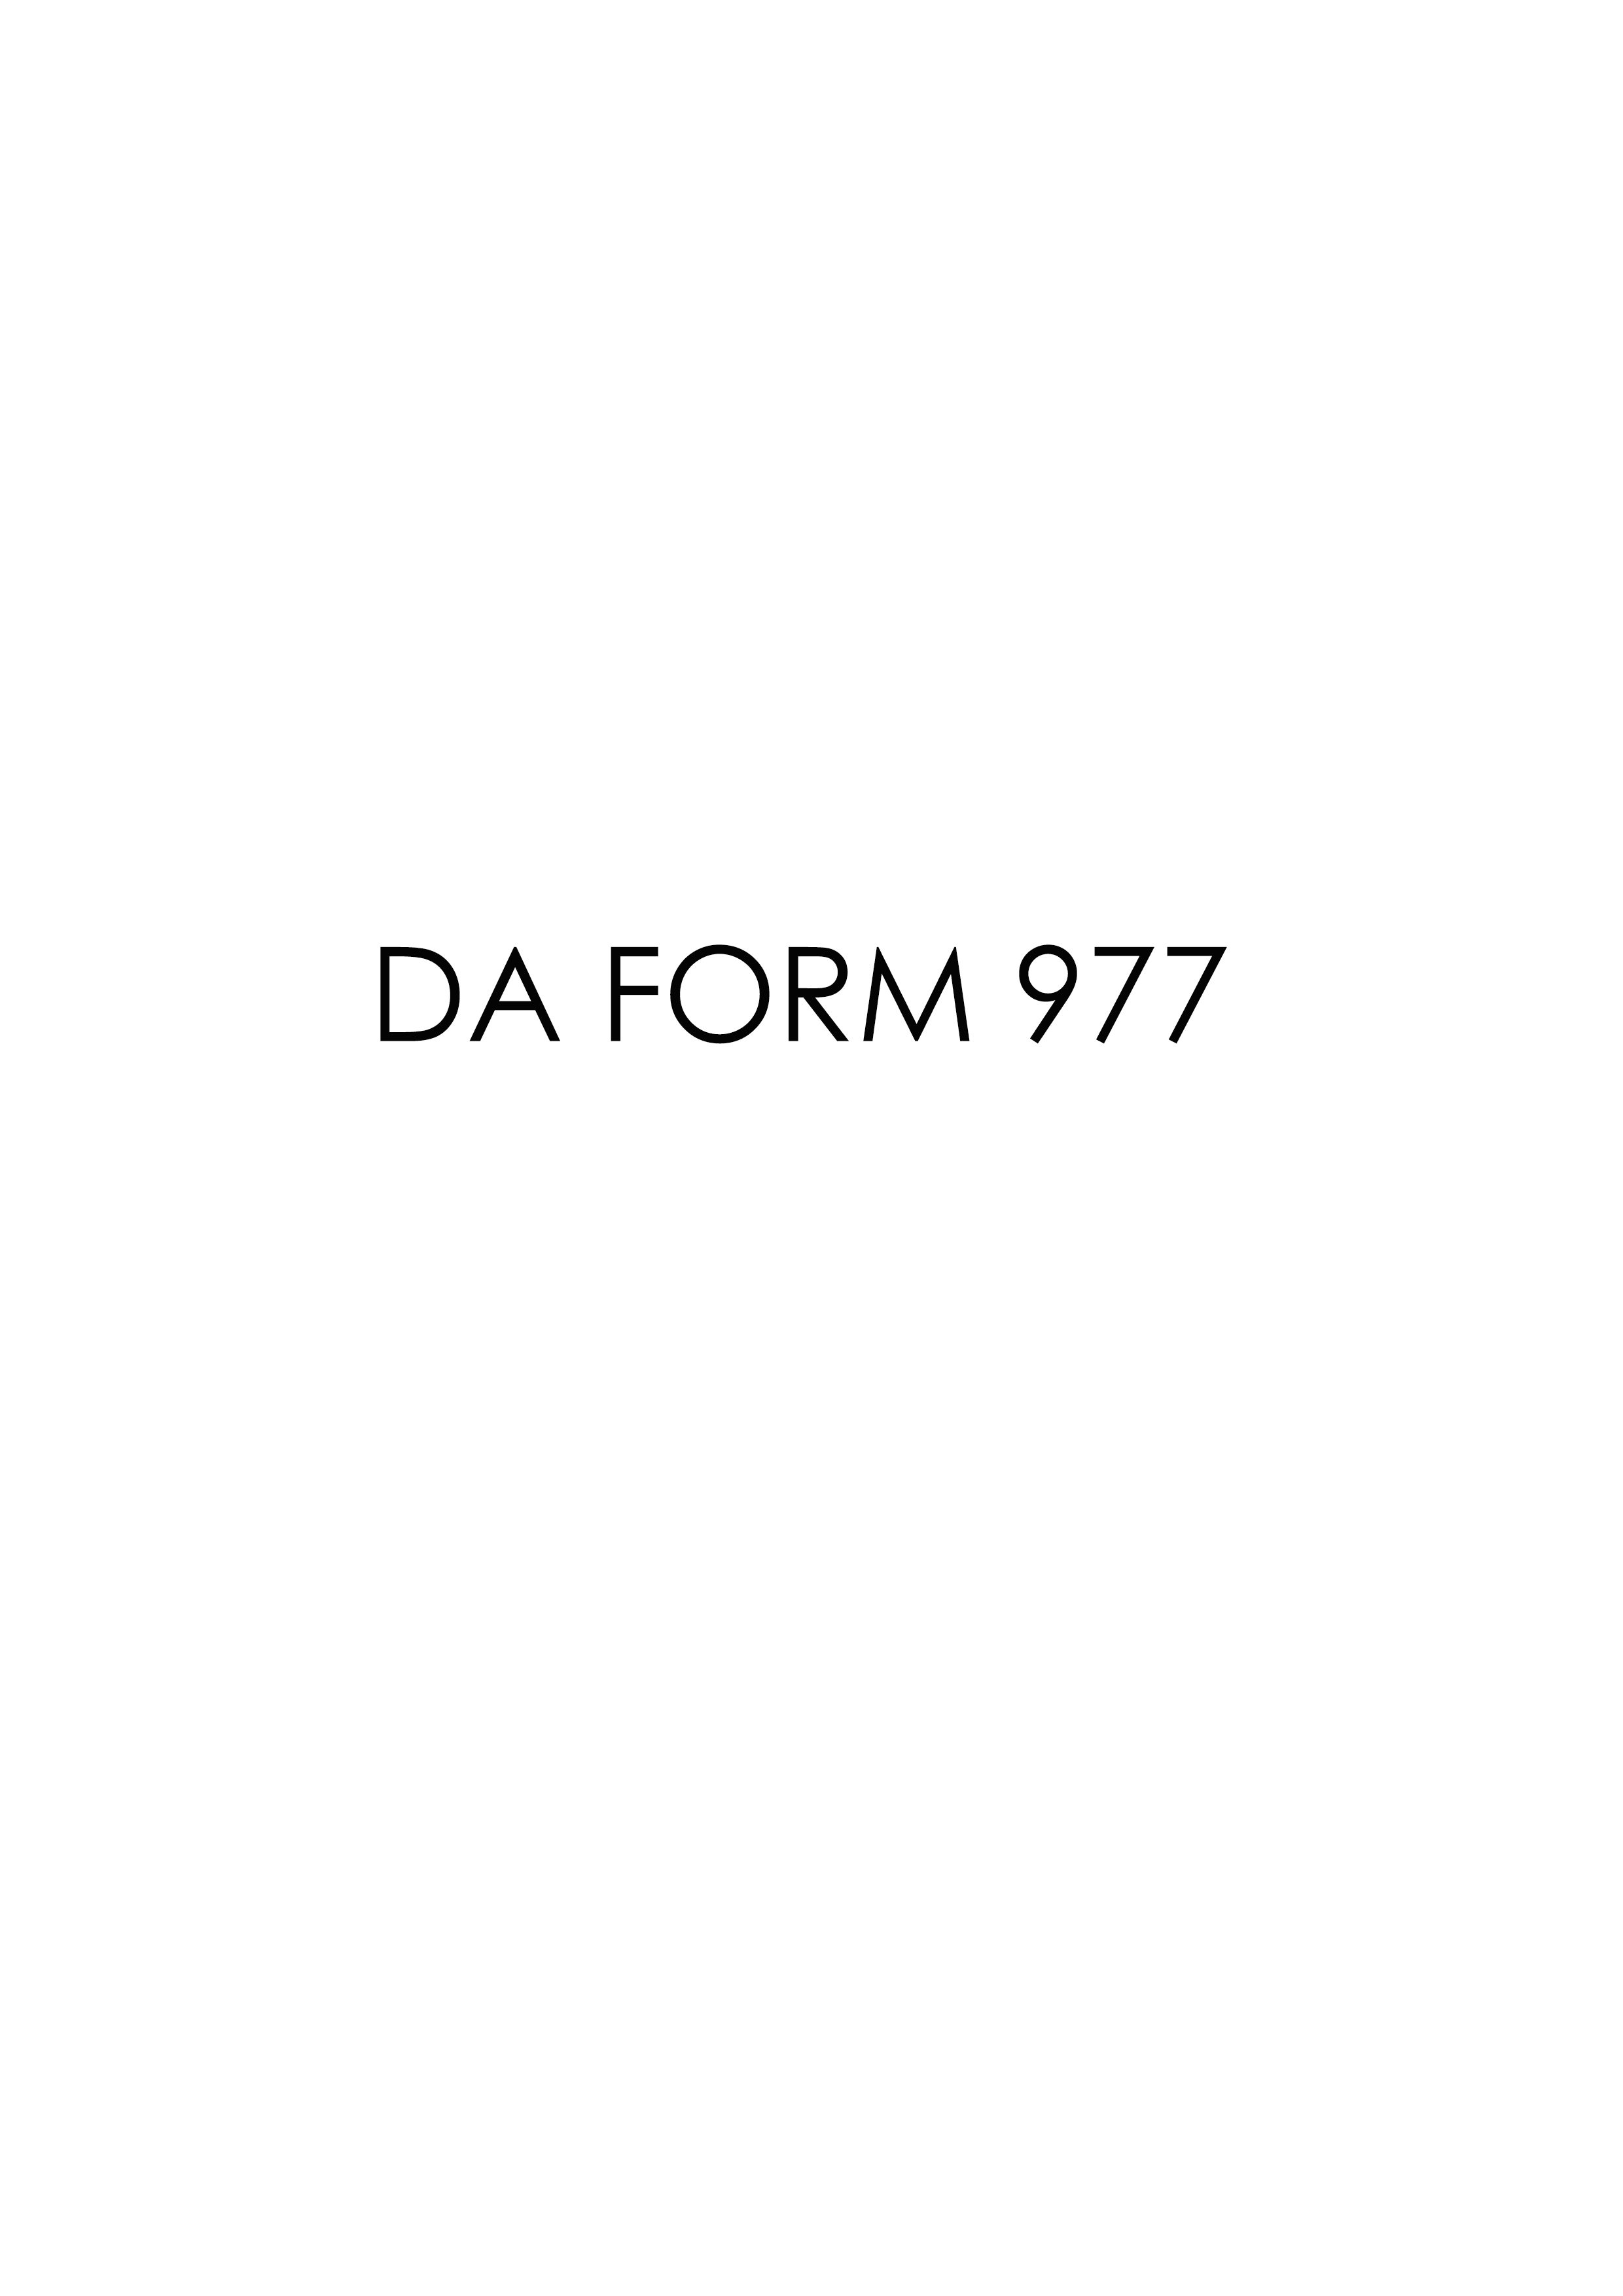 da Form 977 fillable